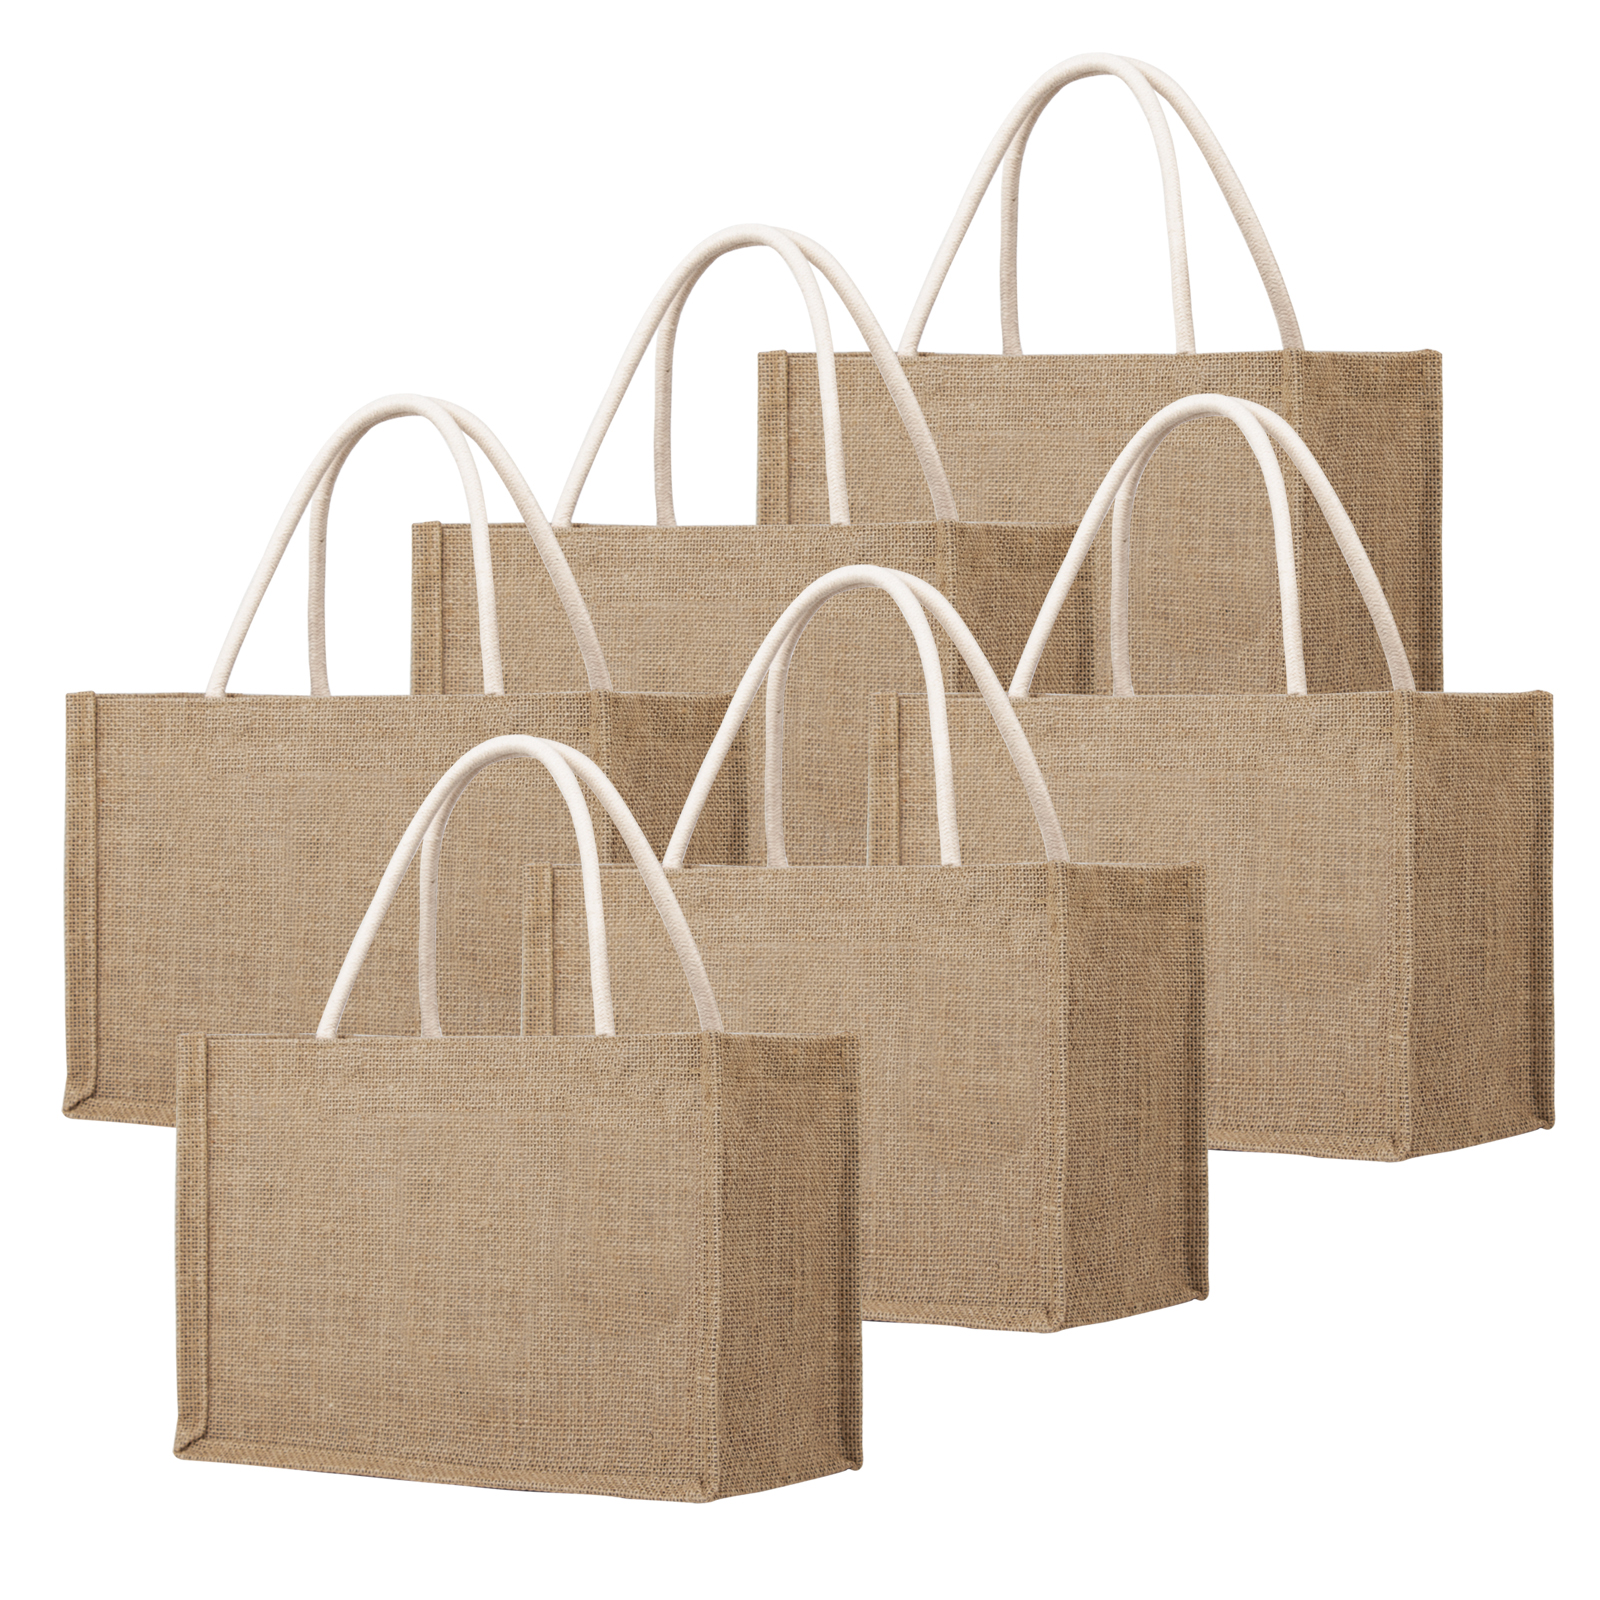 Waterproof Jute Bag with Handle Burlap Tote Bags Eco Friendly Reusable Natural Color Burlap Totes Heavy Duty Gift Bags,3 Packs